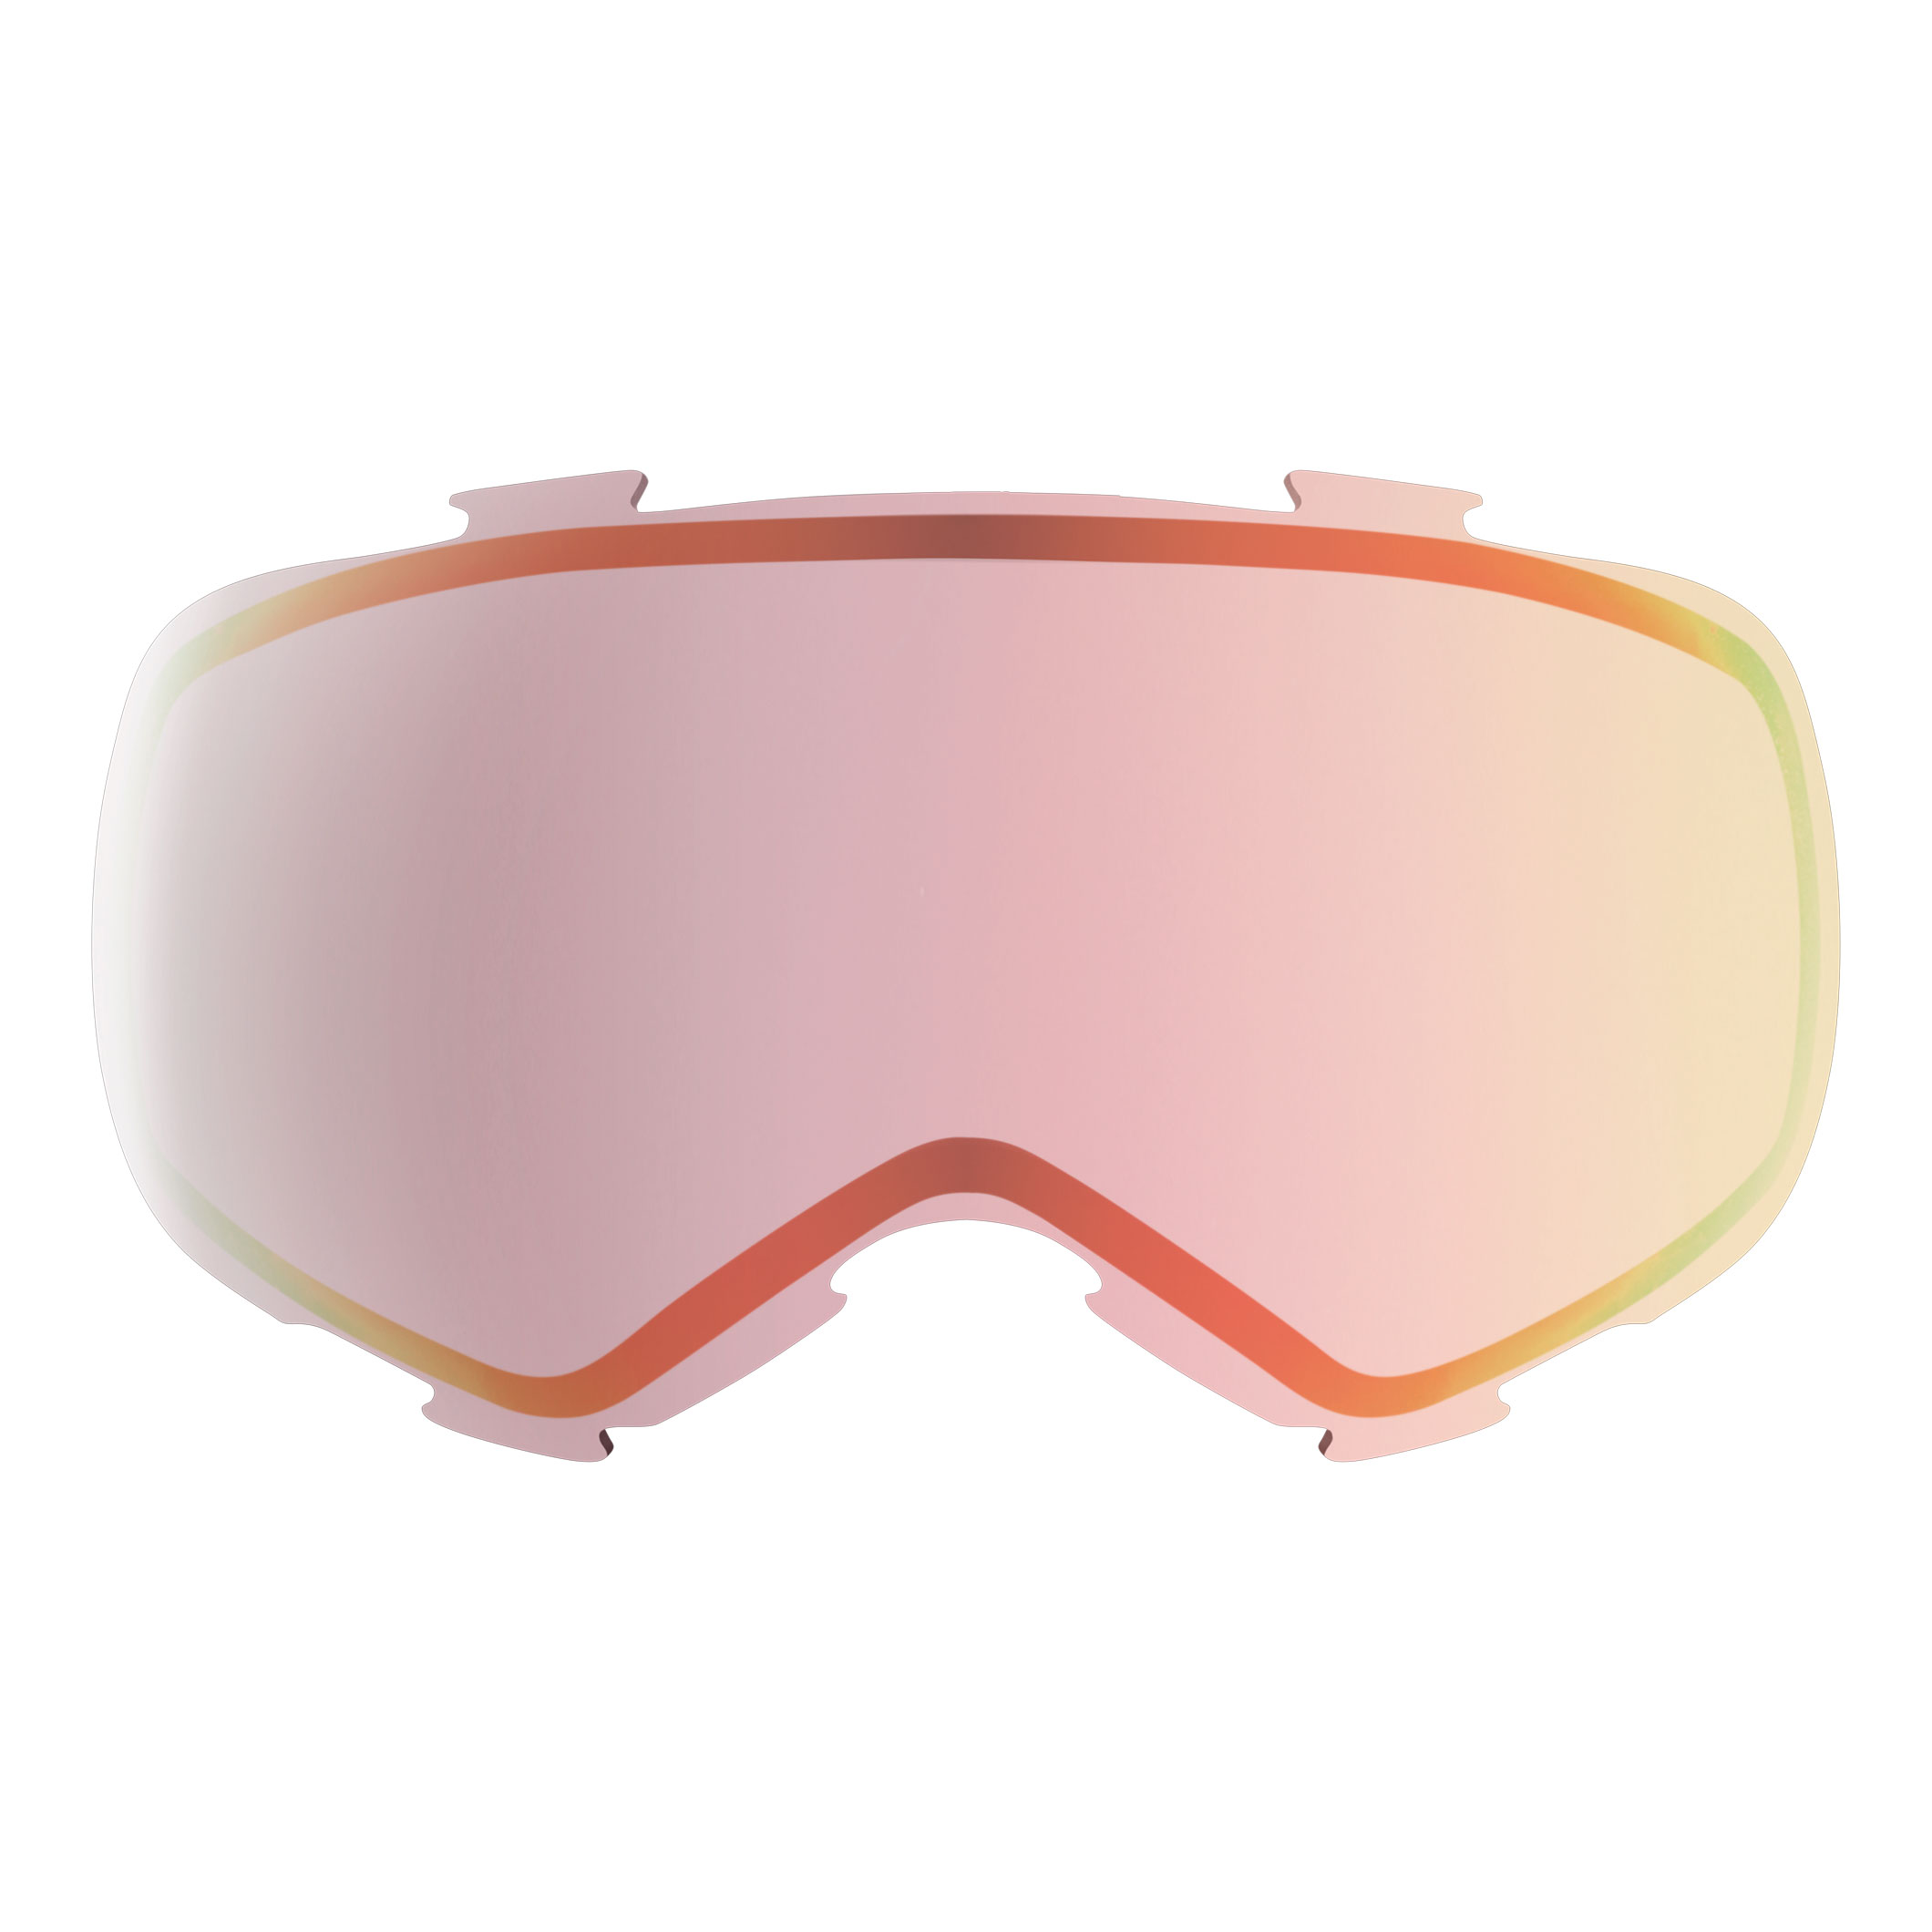  Snowboard Goggles	 -  atomic REVEL RACING